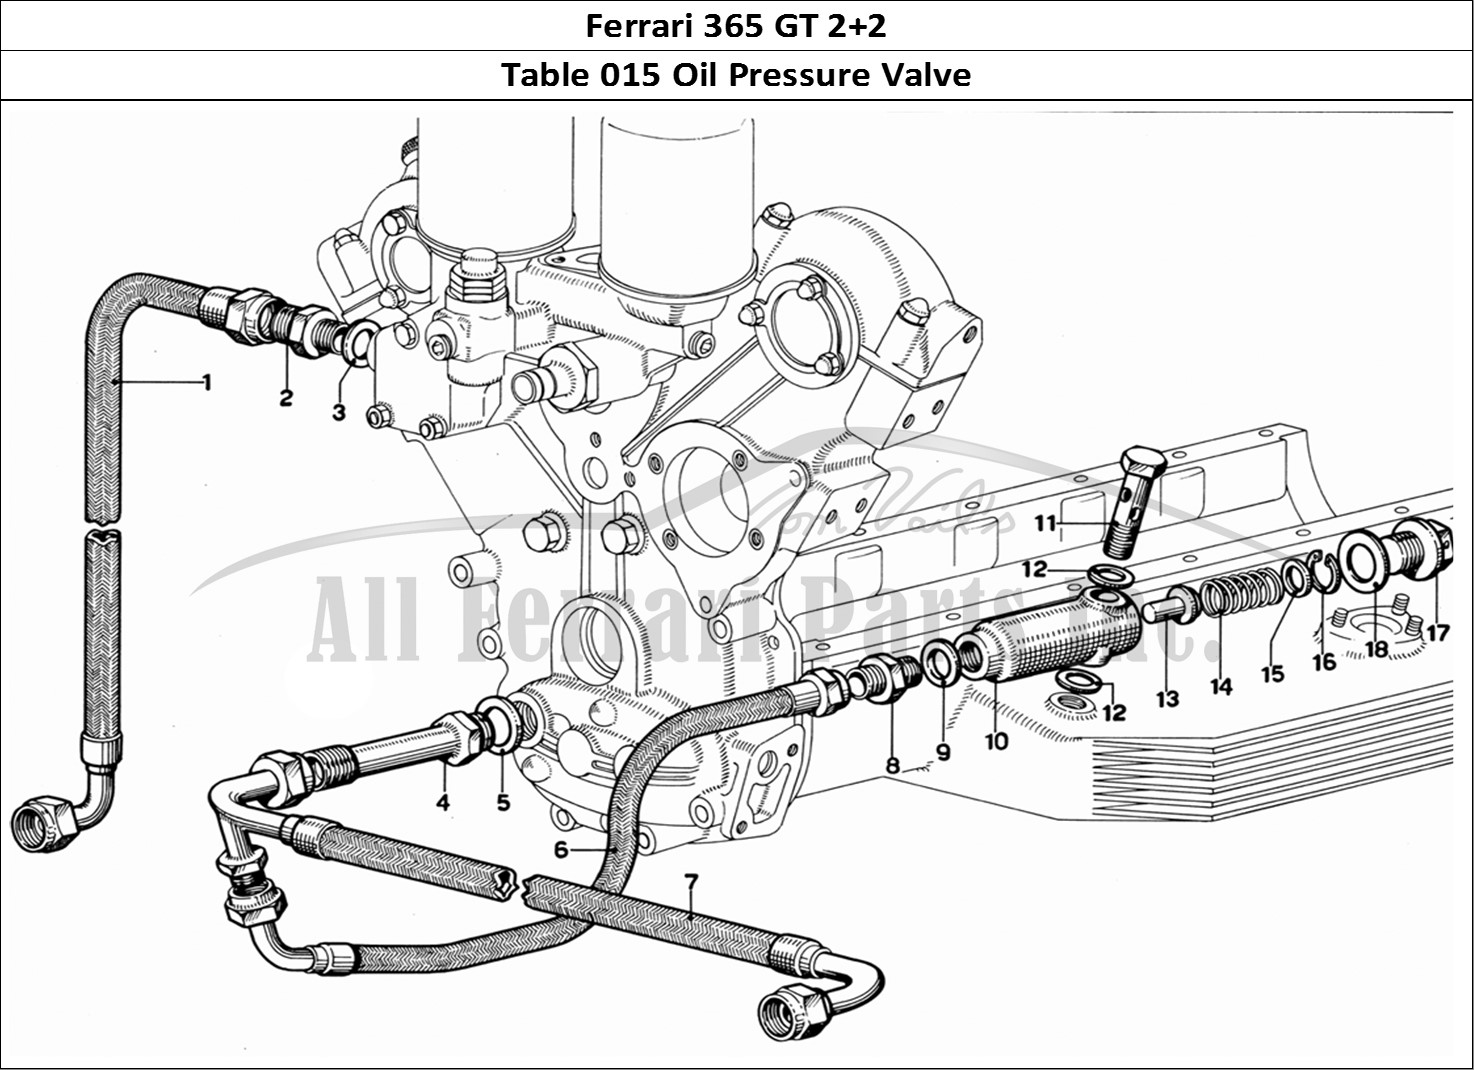 Ferrari Parts Ferrari 365 GT 2+2 (Mechanical) Page 015 Oil Pressure Valve